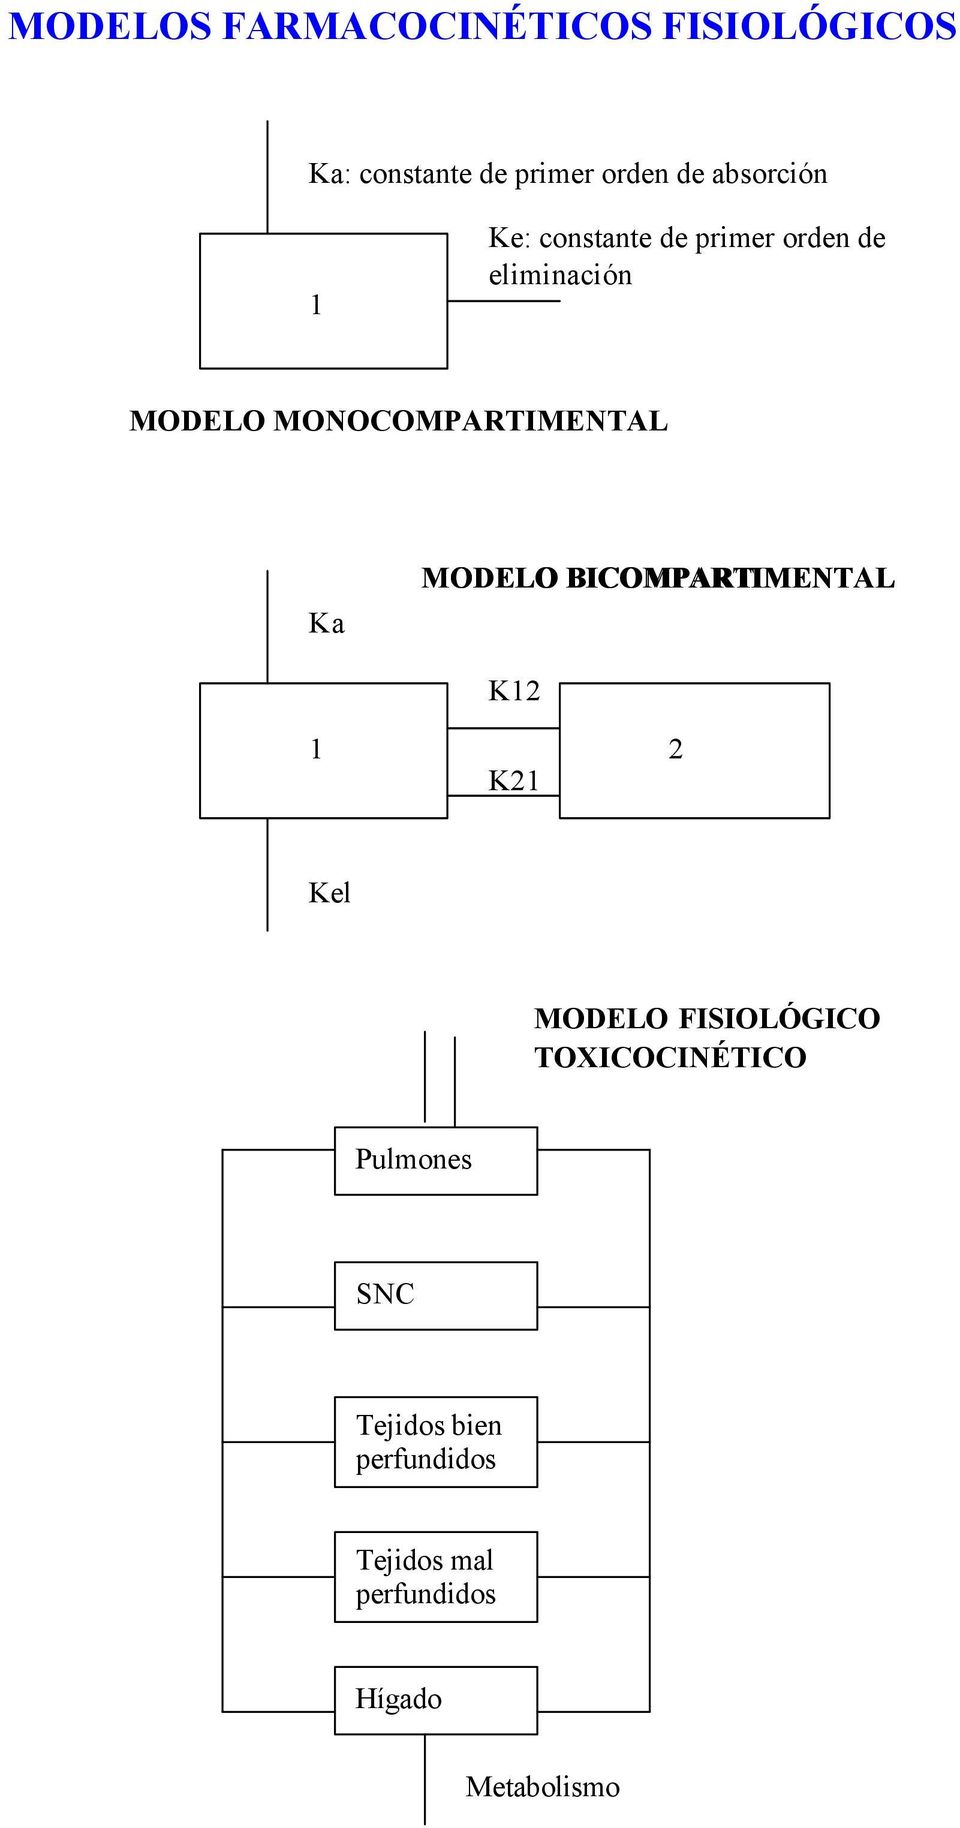 MONOCOMPARTIMENTAL Ka MODELO BICOMPARTIMENTAL K12 1 2 K21 Kel MODELO